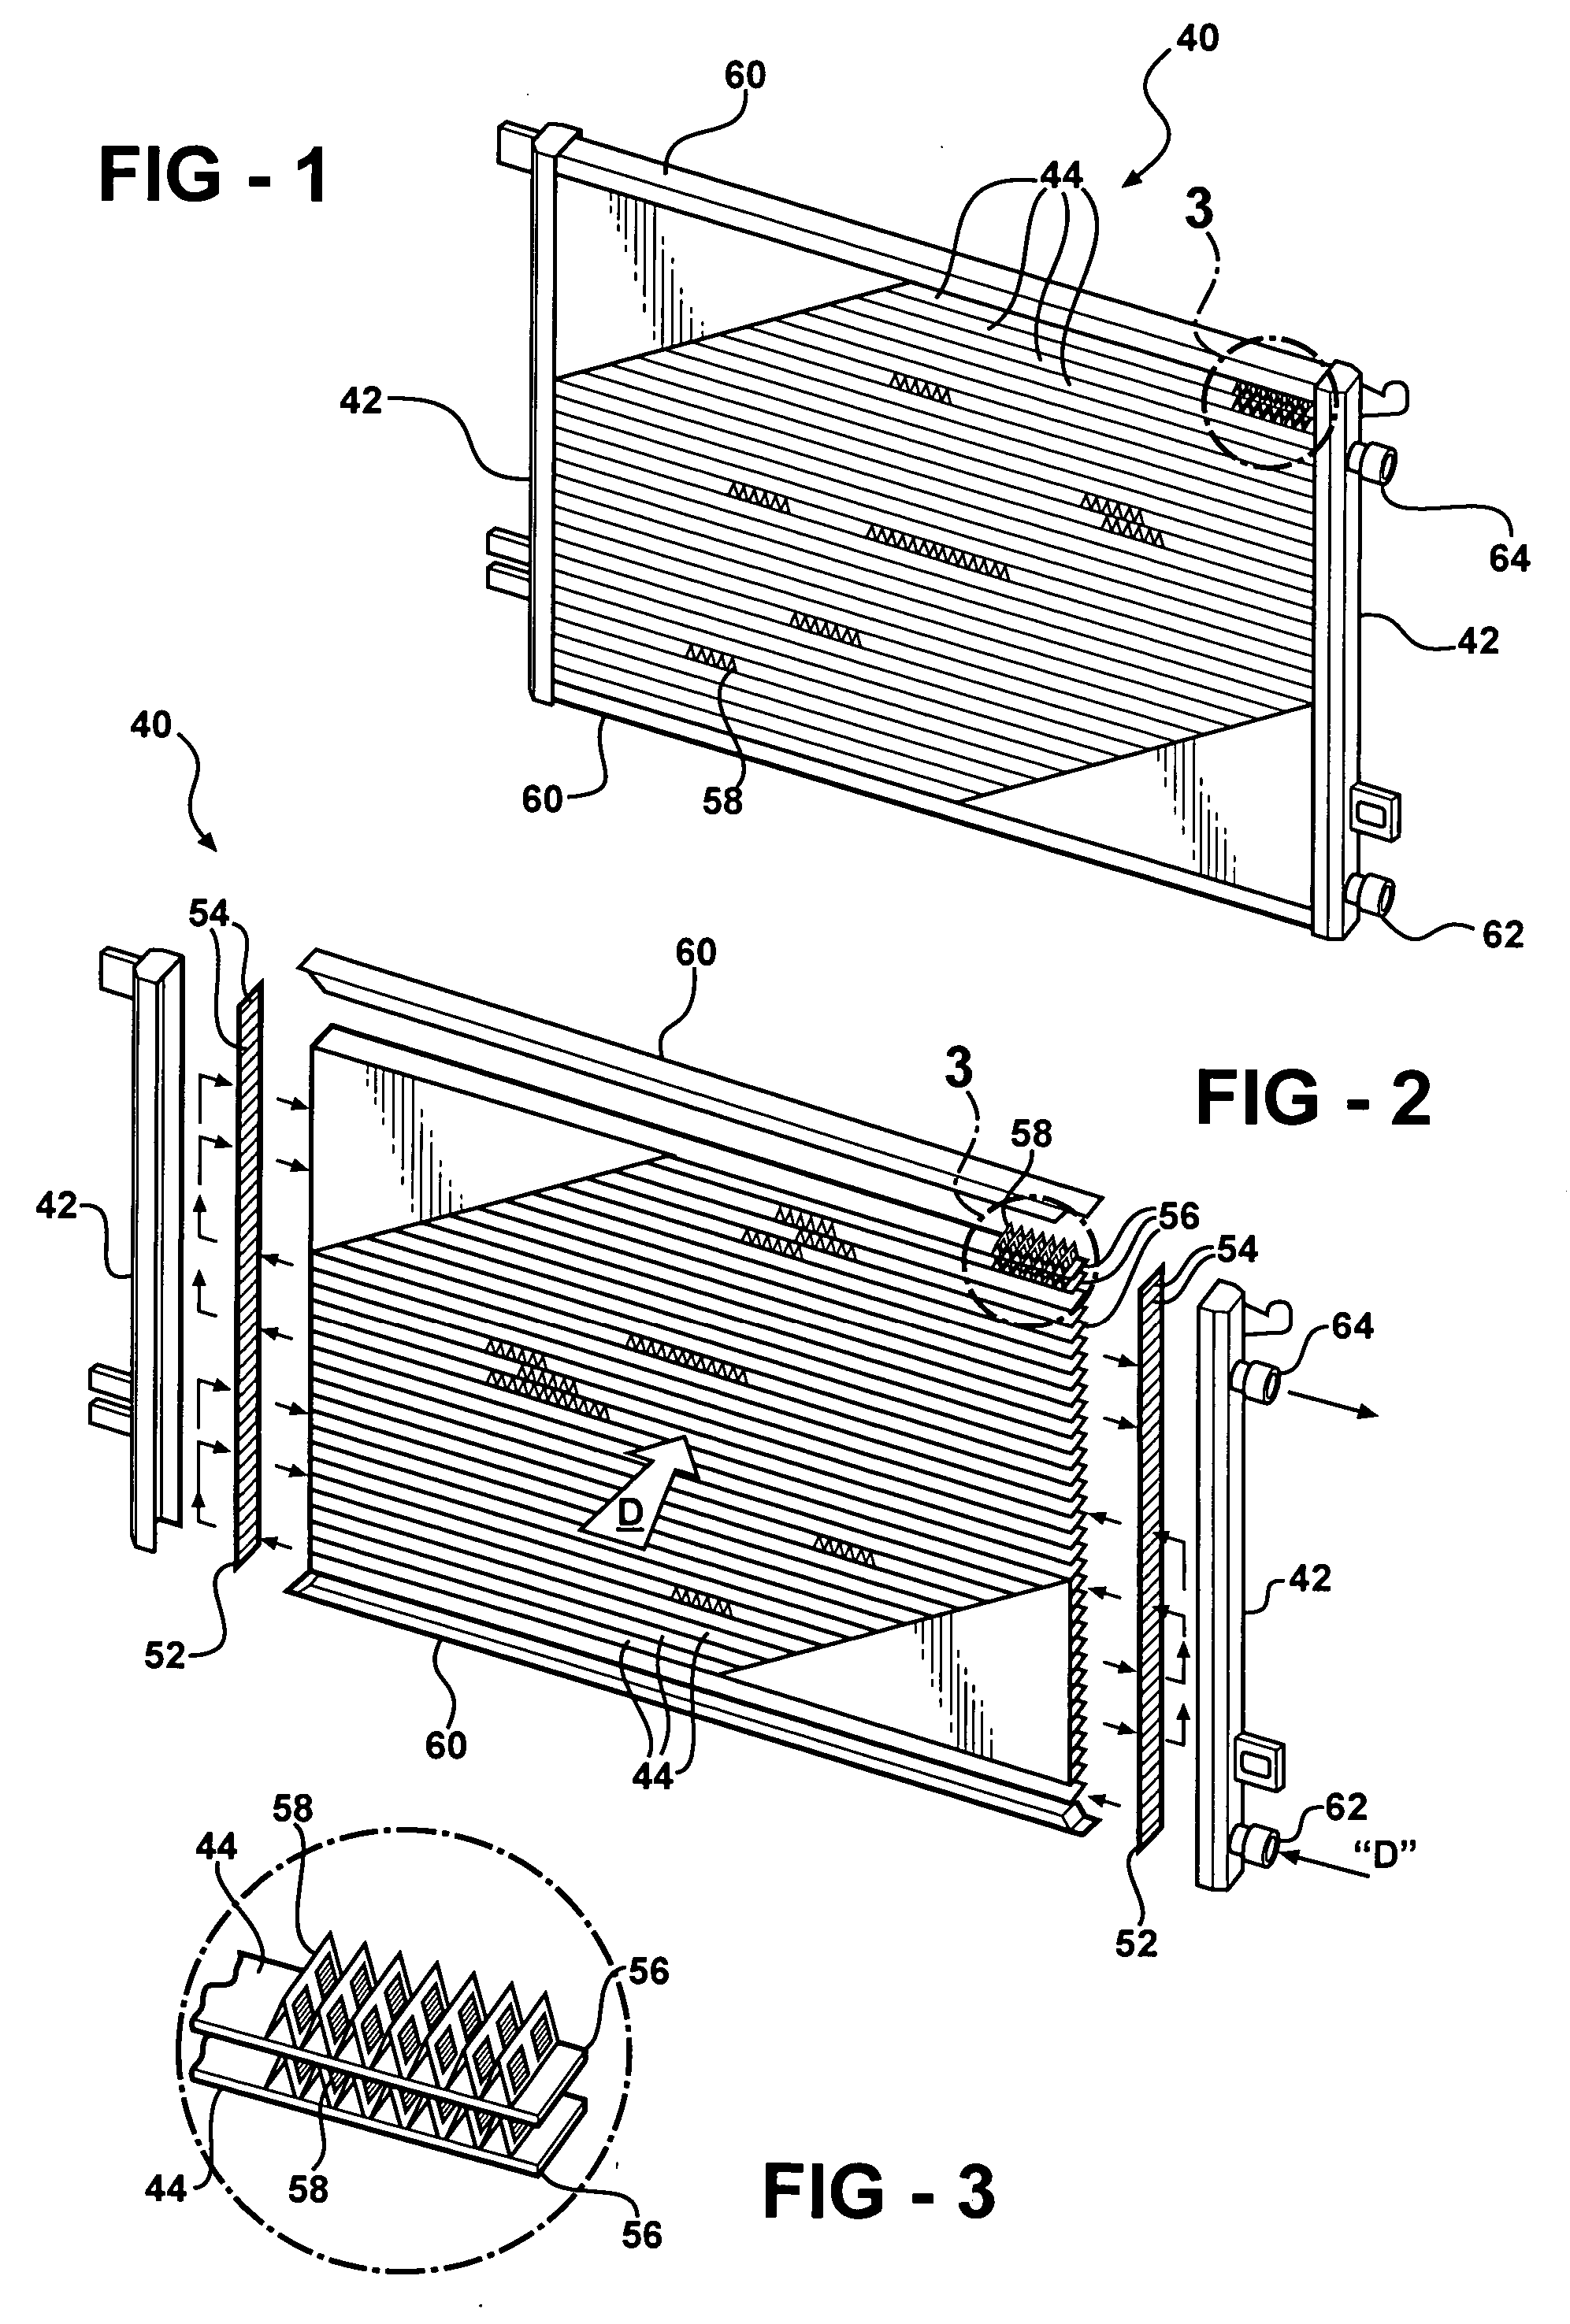 Flat tube evaporator with enhanced refrigerant flow passages